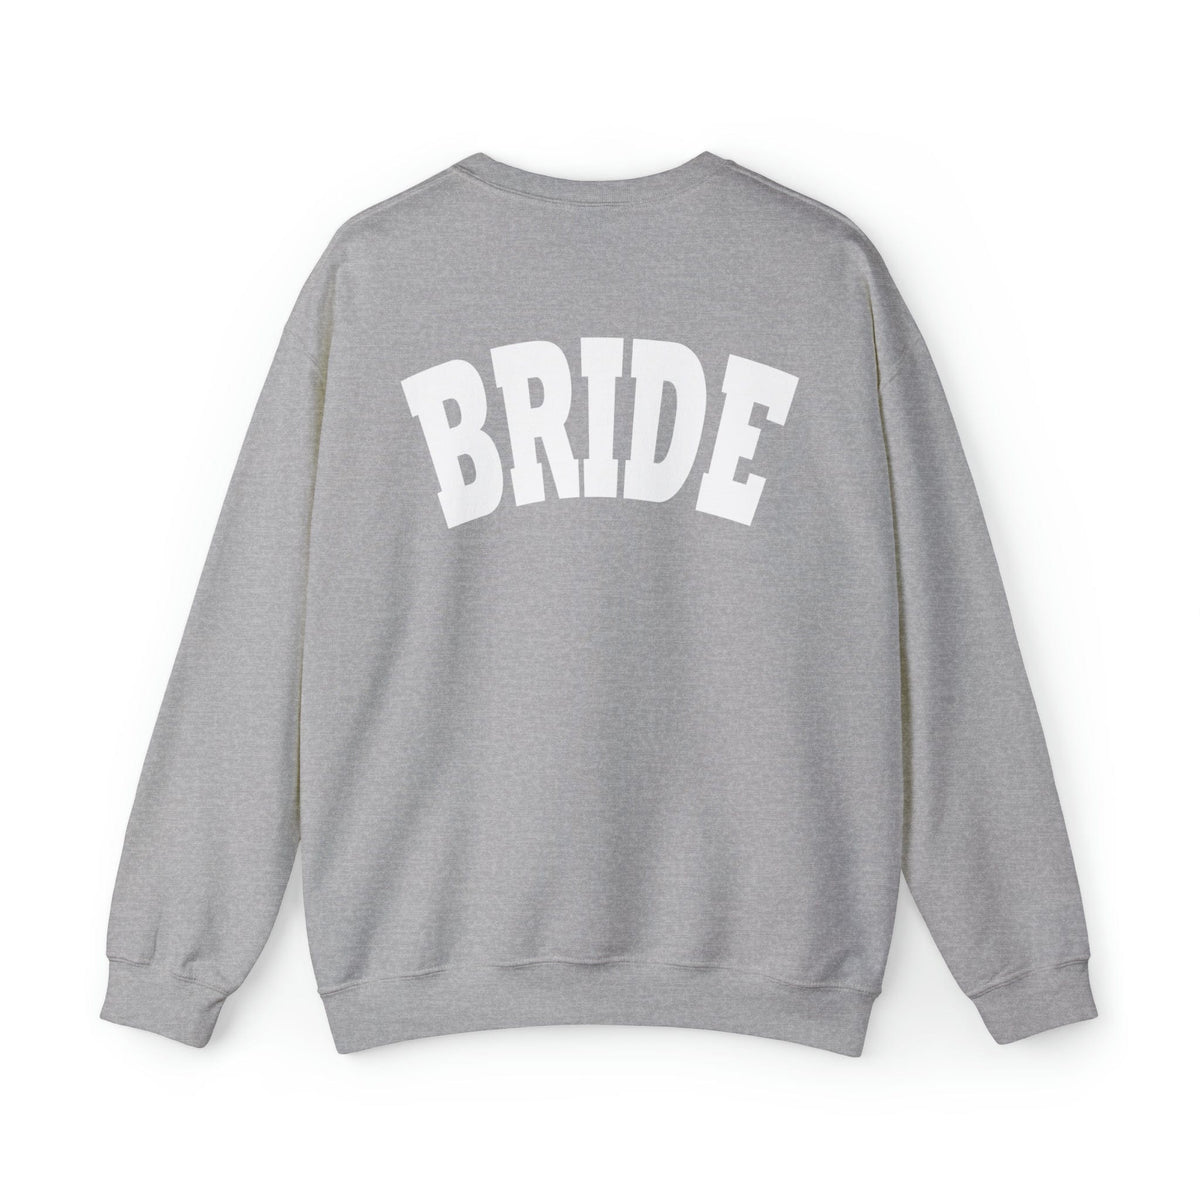 Bride Jersey Style Crewneck Bridal Sweatshirt Sweatshirt TheFringeCultureCollective